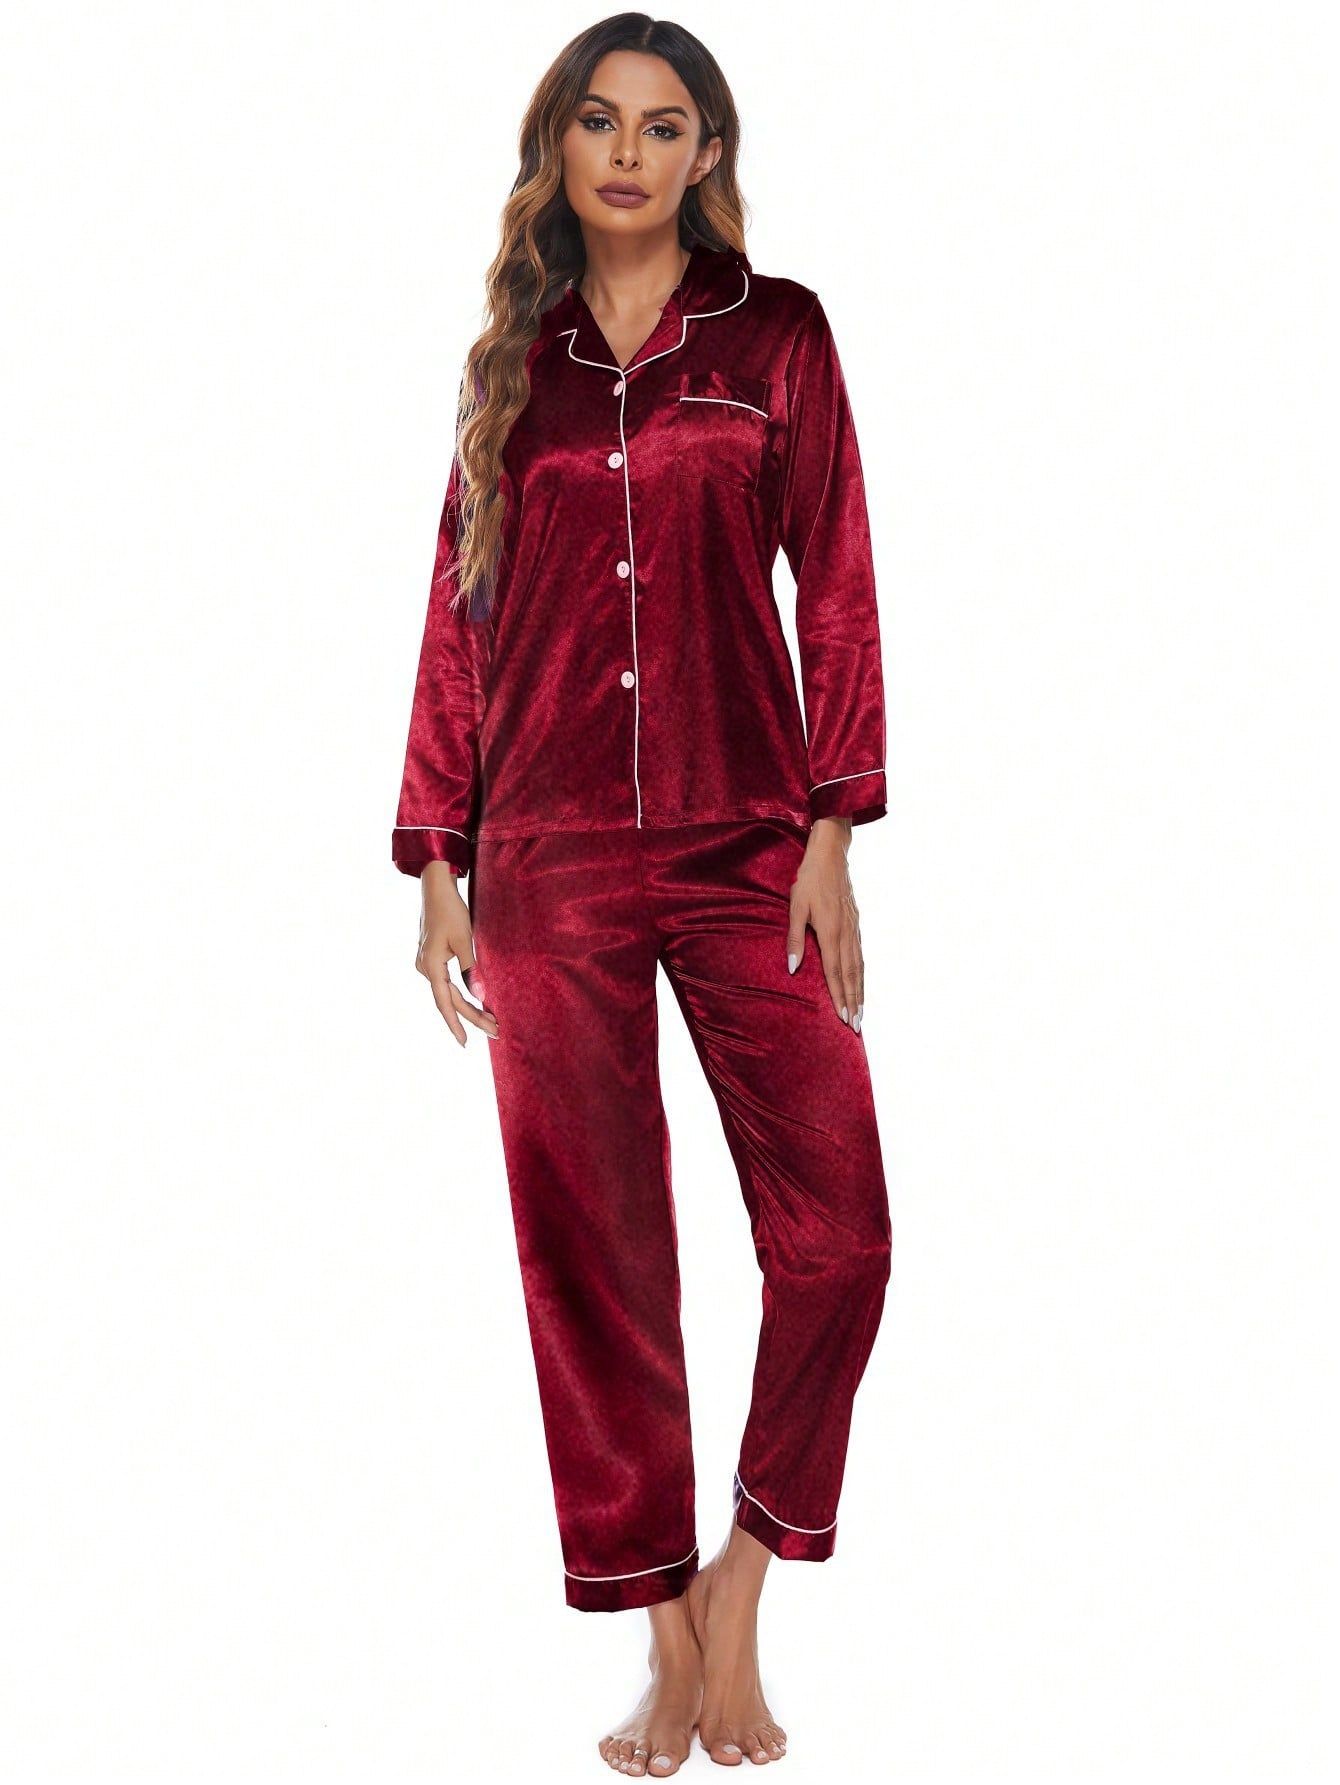 Women's homewear Women's pajamas nightdress set Women's homewear lace nightdress set4.92(26) | SHEIN